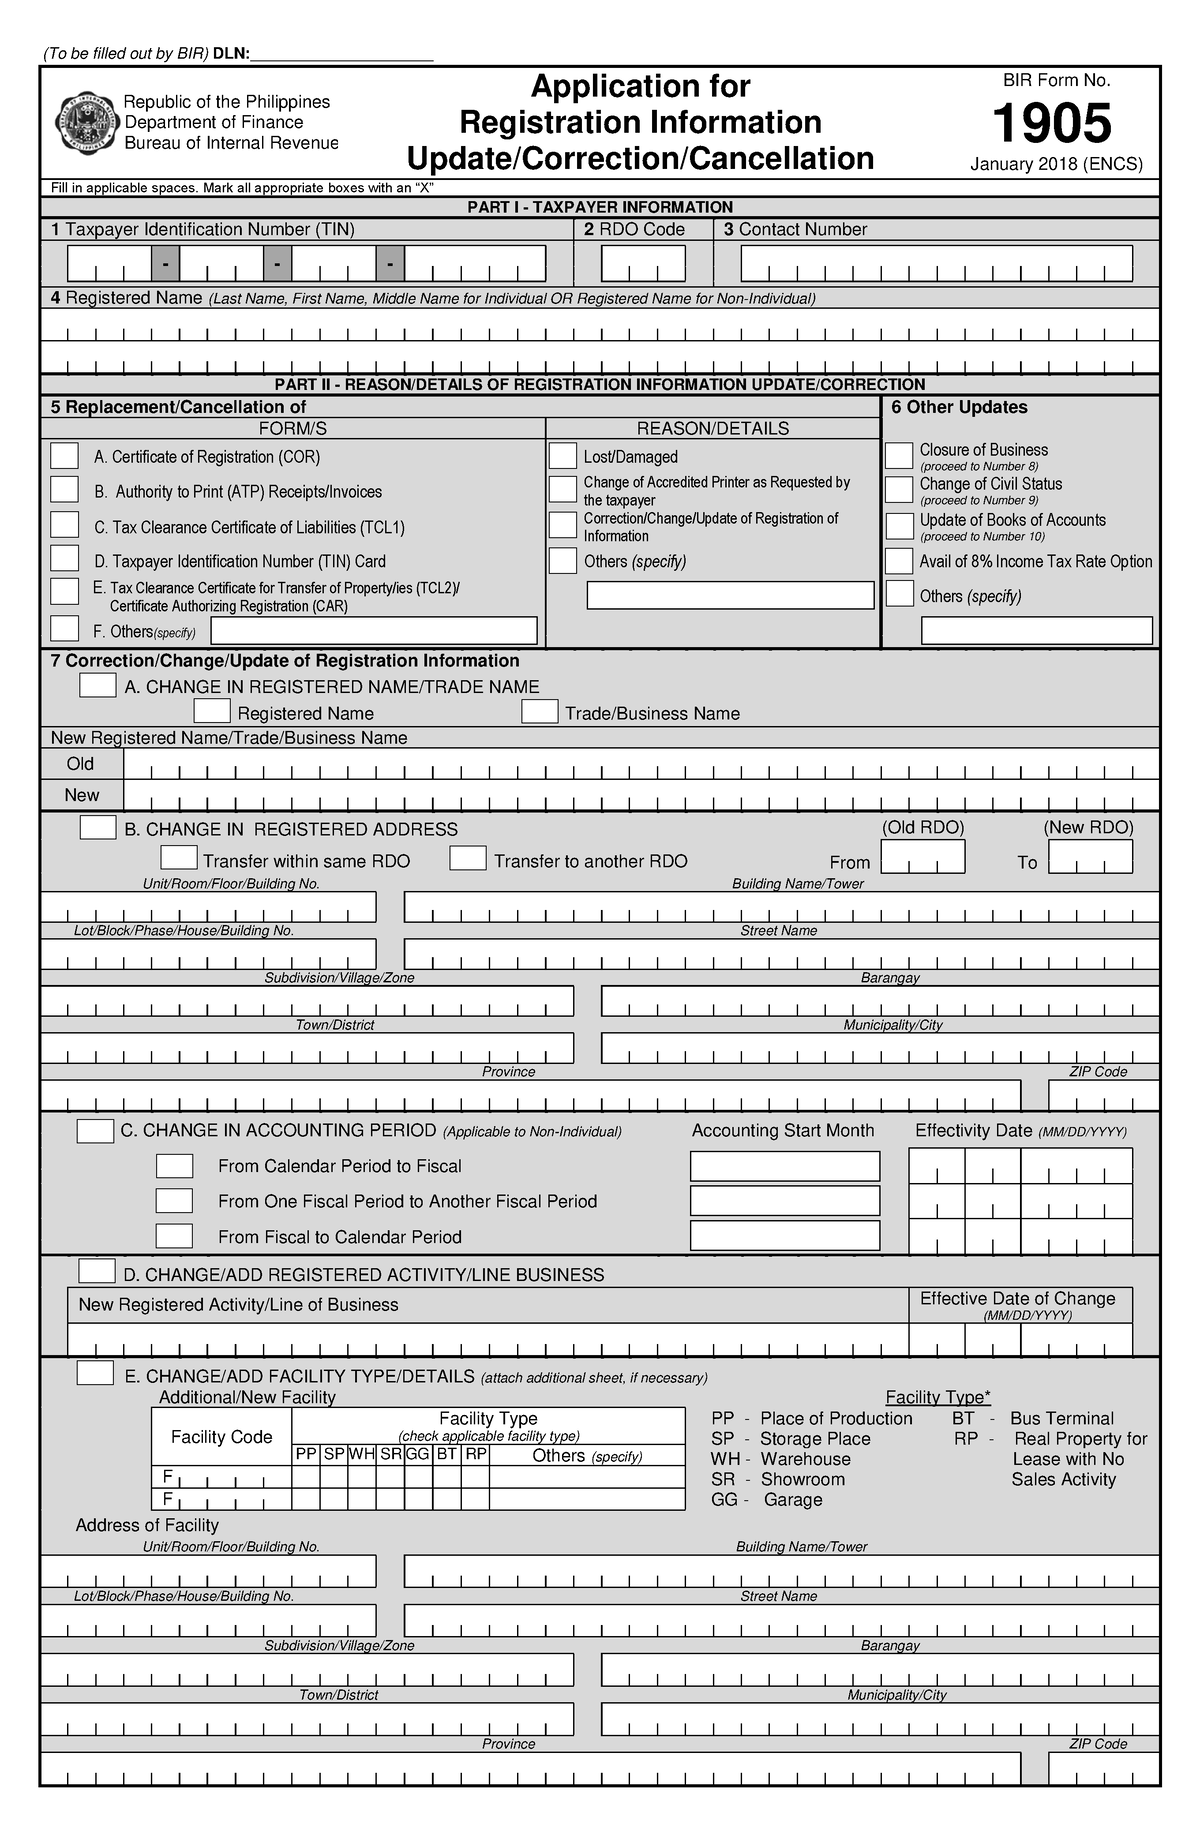 BIR Form No. 1905 - Application for Registration of Books of Accounts